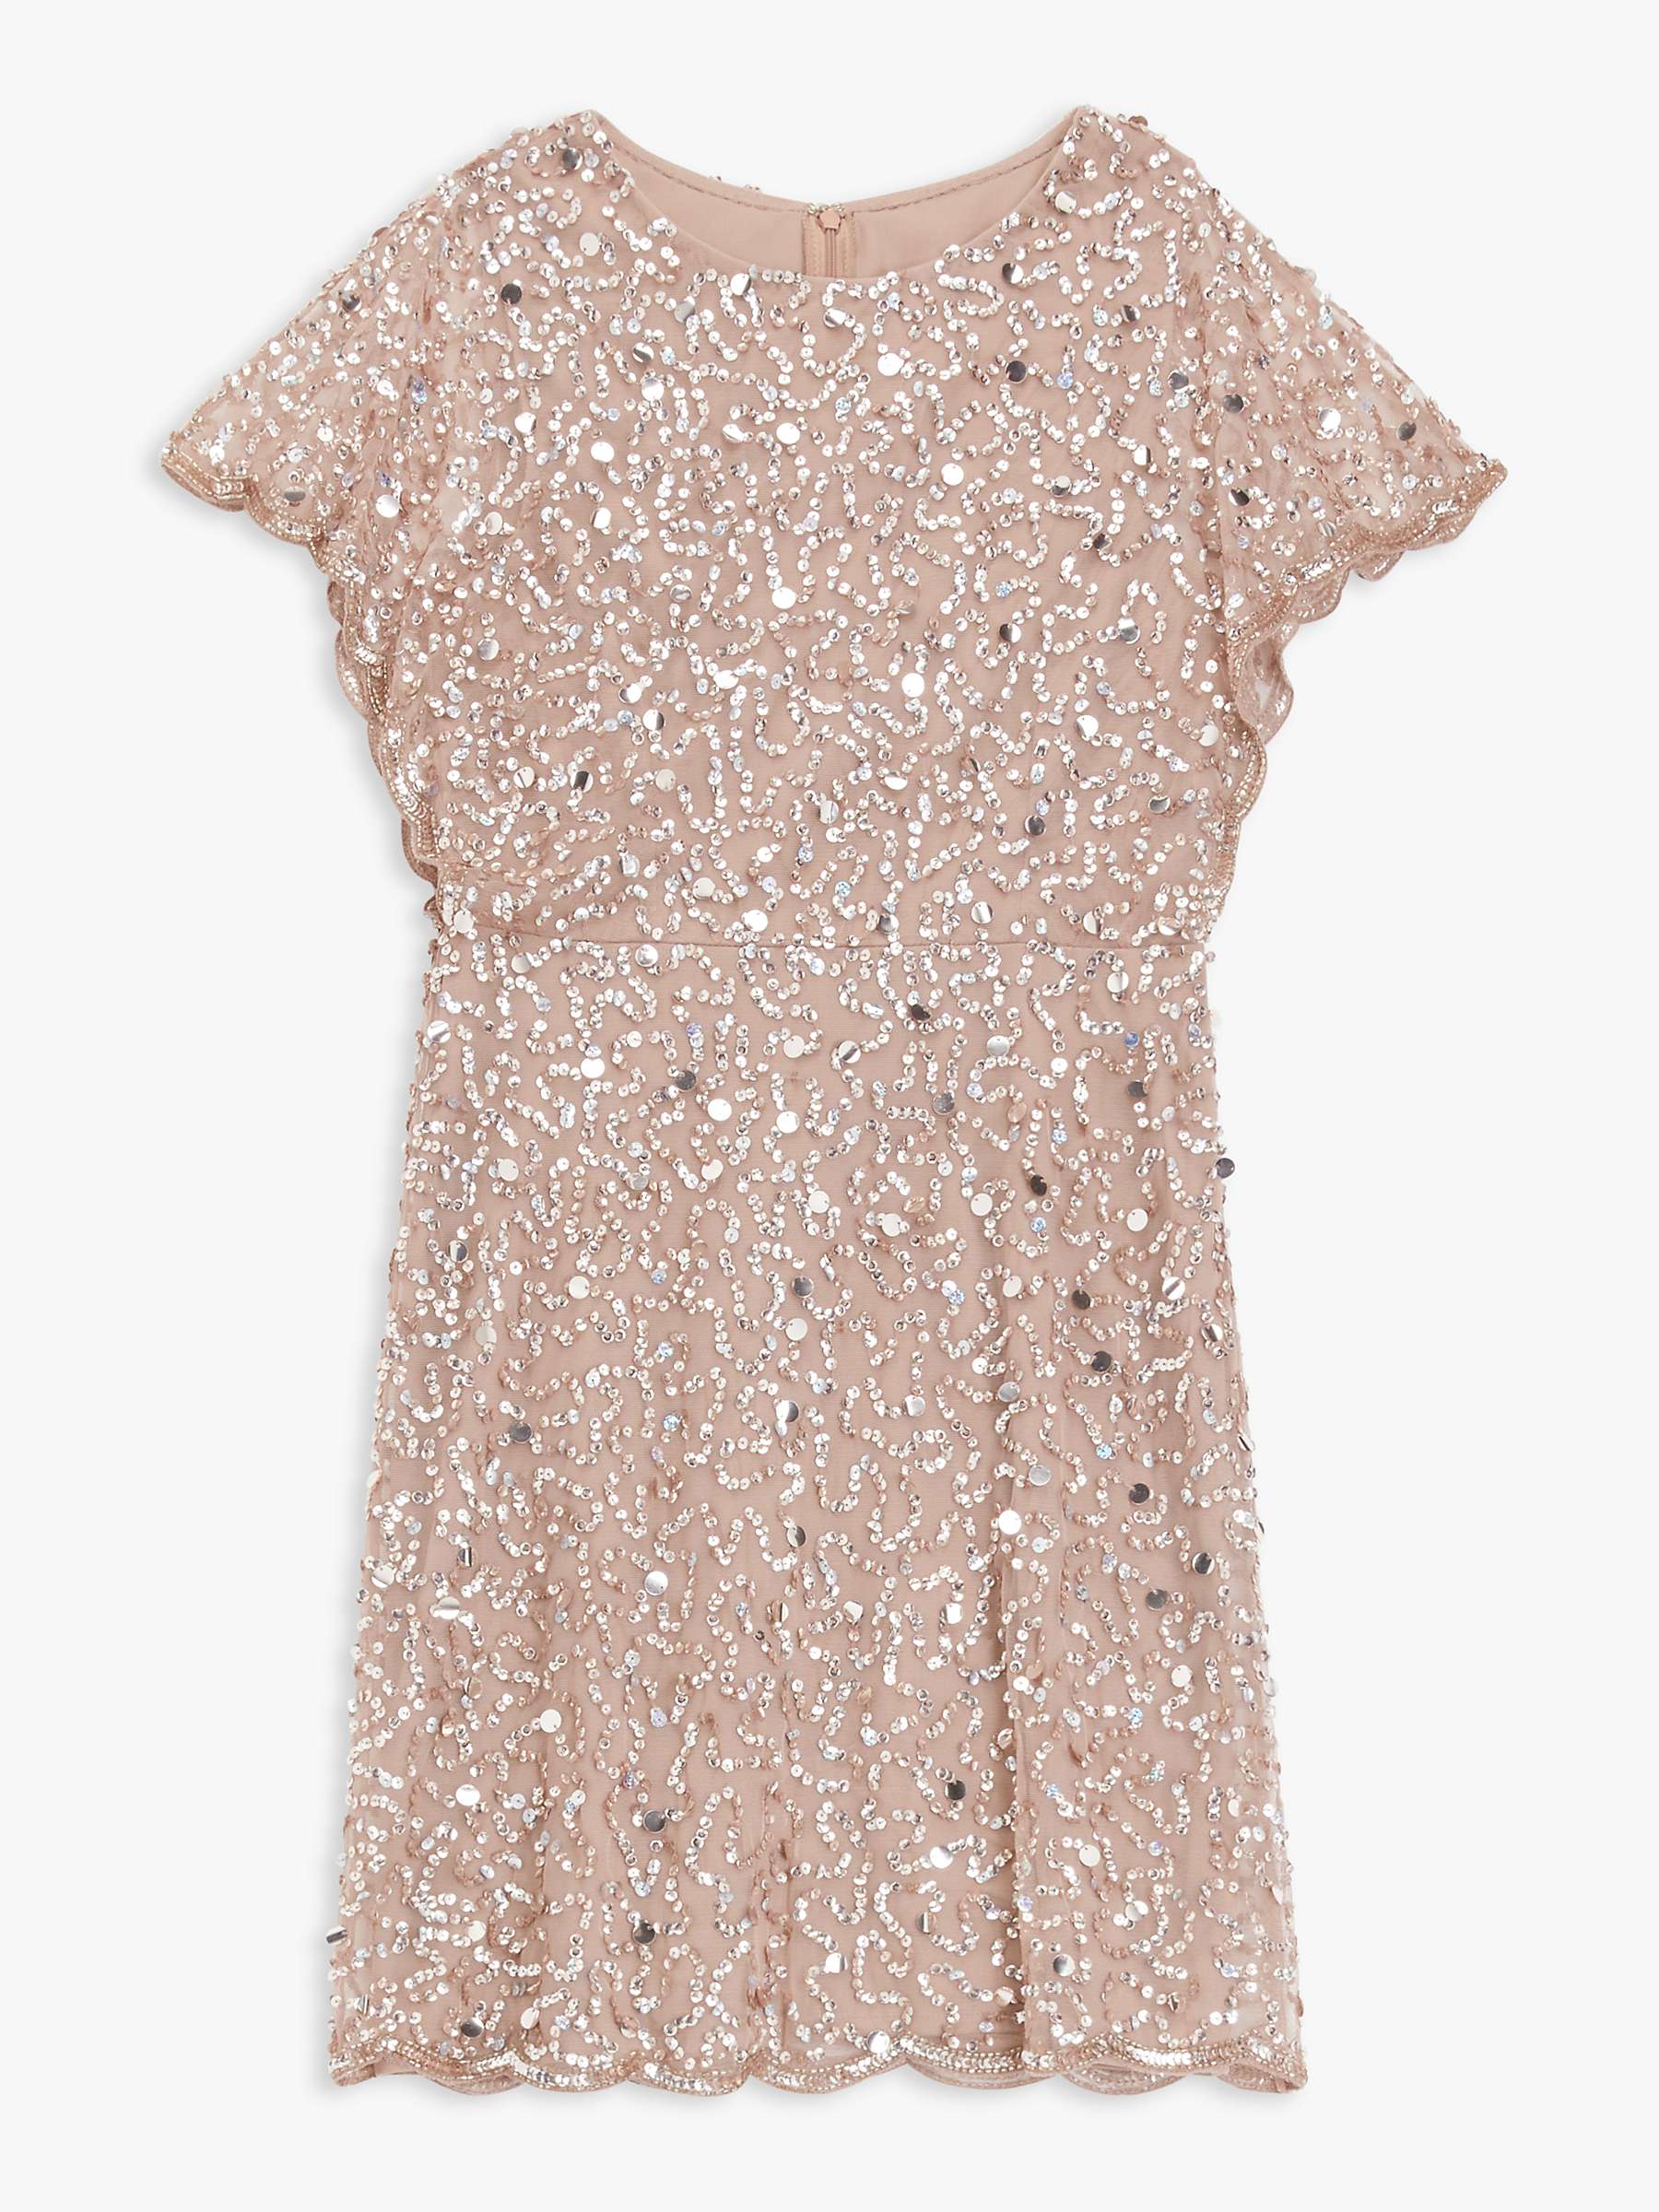 Buy Lace & Beads Rafaella Embellished Mini Dress Online at johnlewis.com